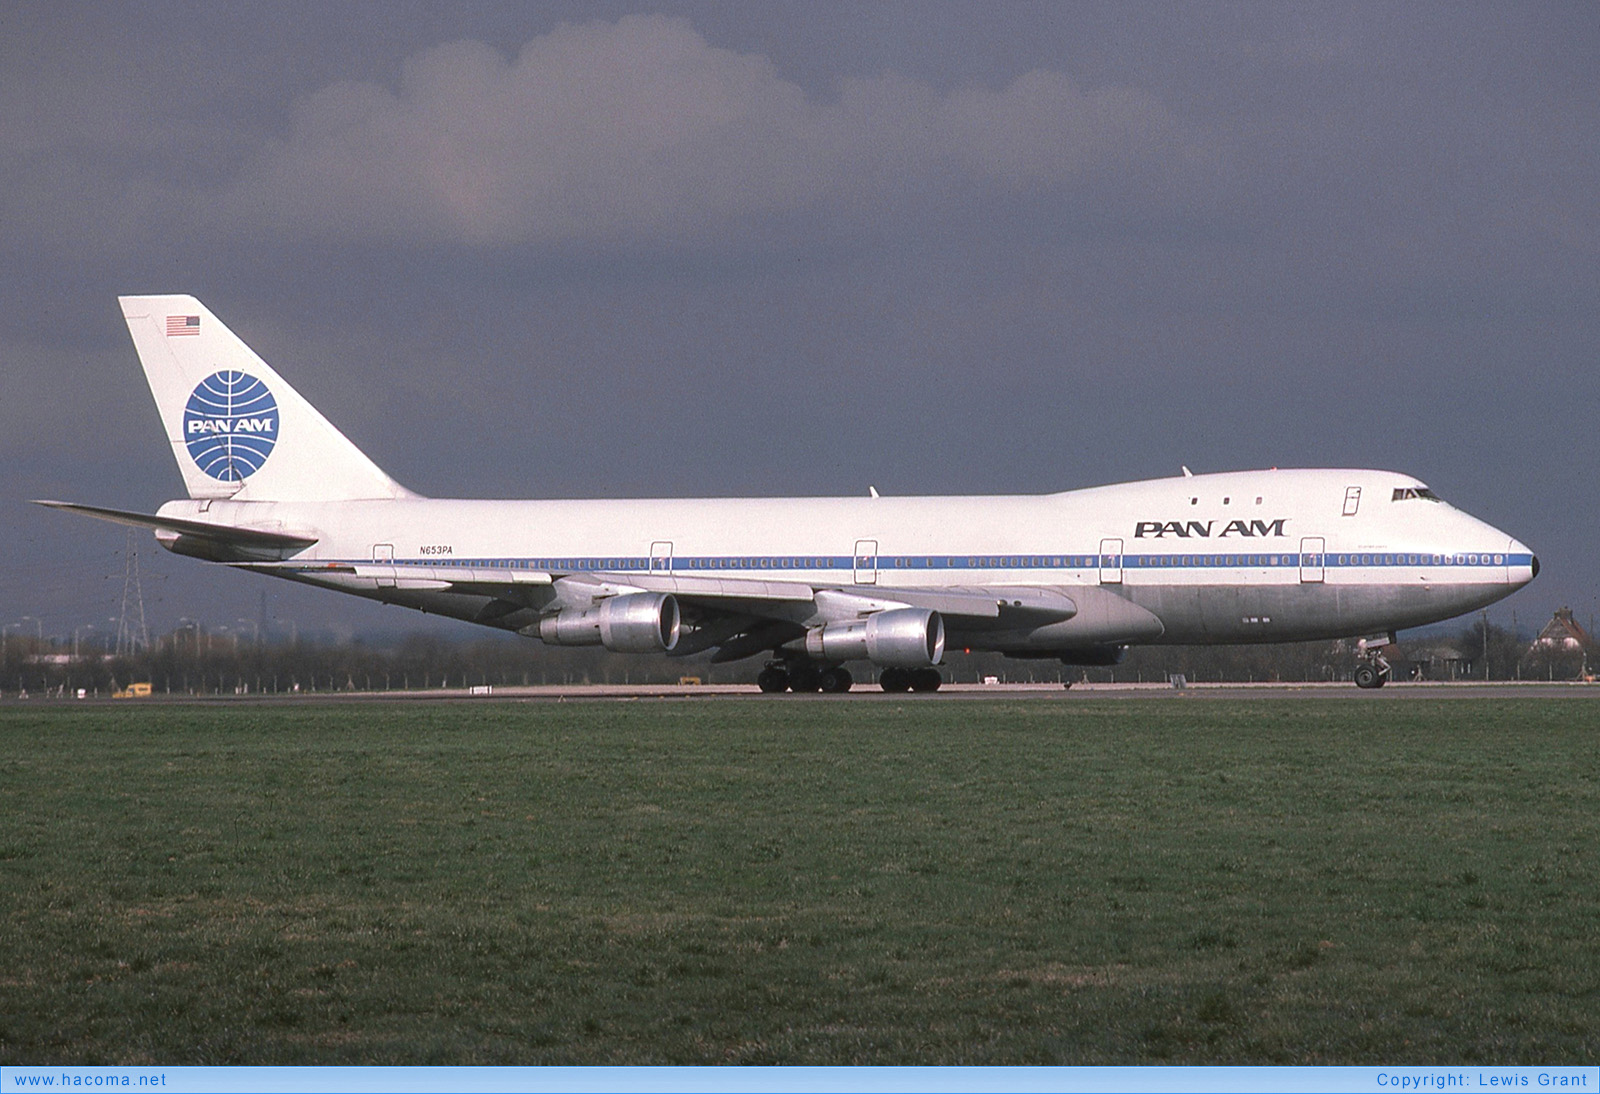 Photo of N653PA - Pan Am Clipper Unity / Pride of the Ocean - London Heathrow Airport - Feb 27, 1977